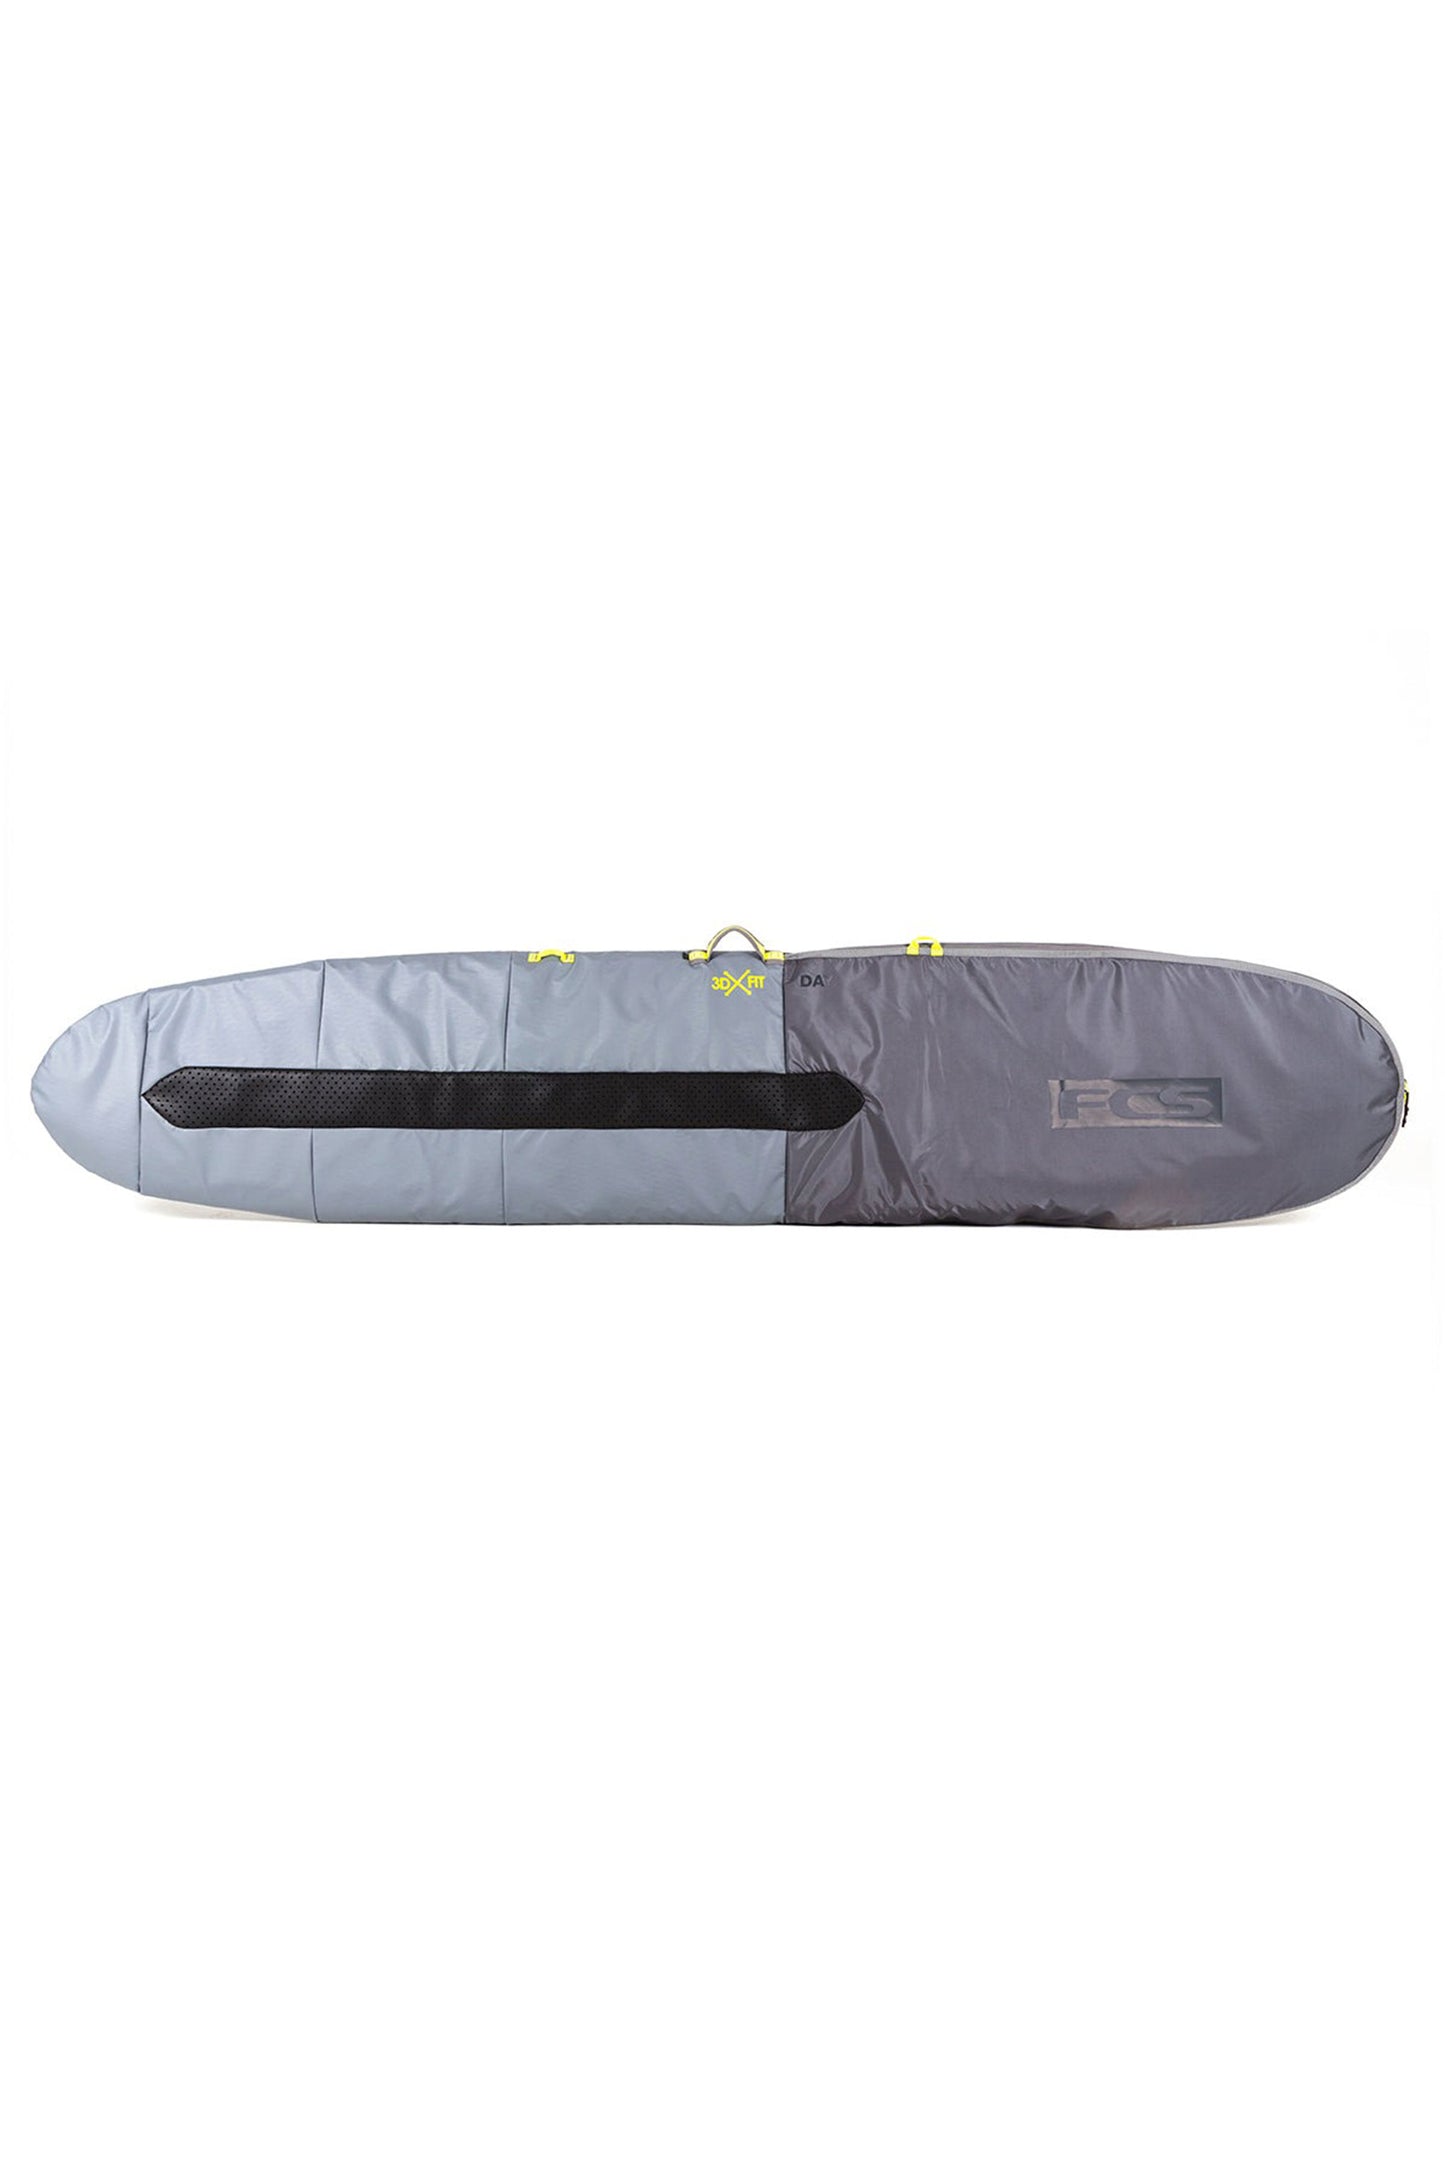     Pukas-Surf-Shop-fcs-boardbag-Day-Long-Board